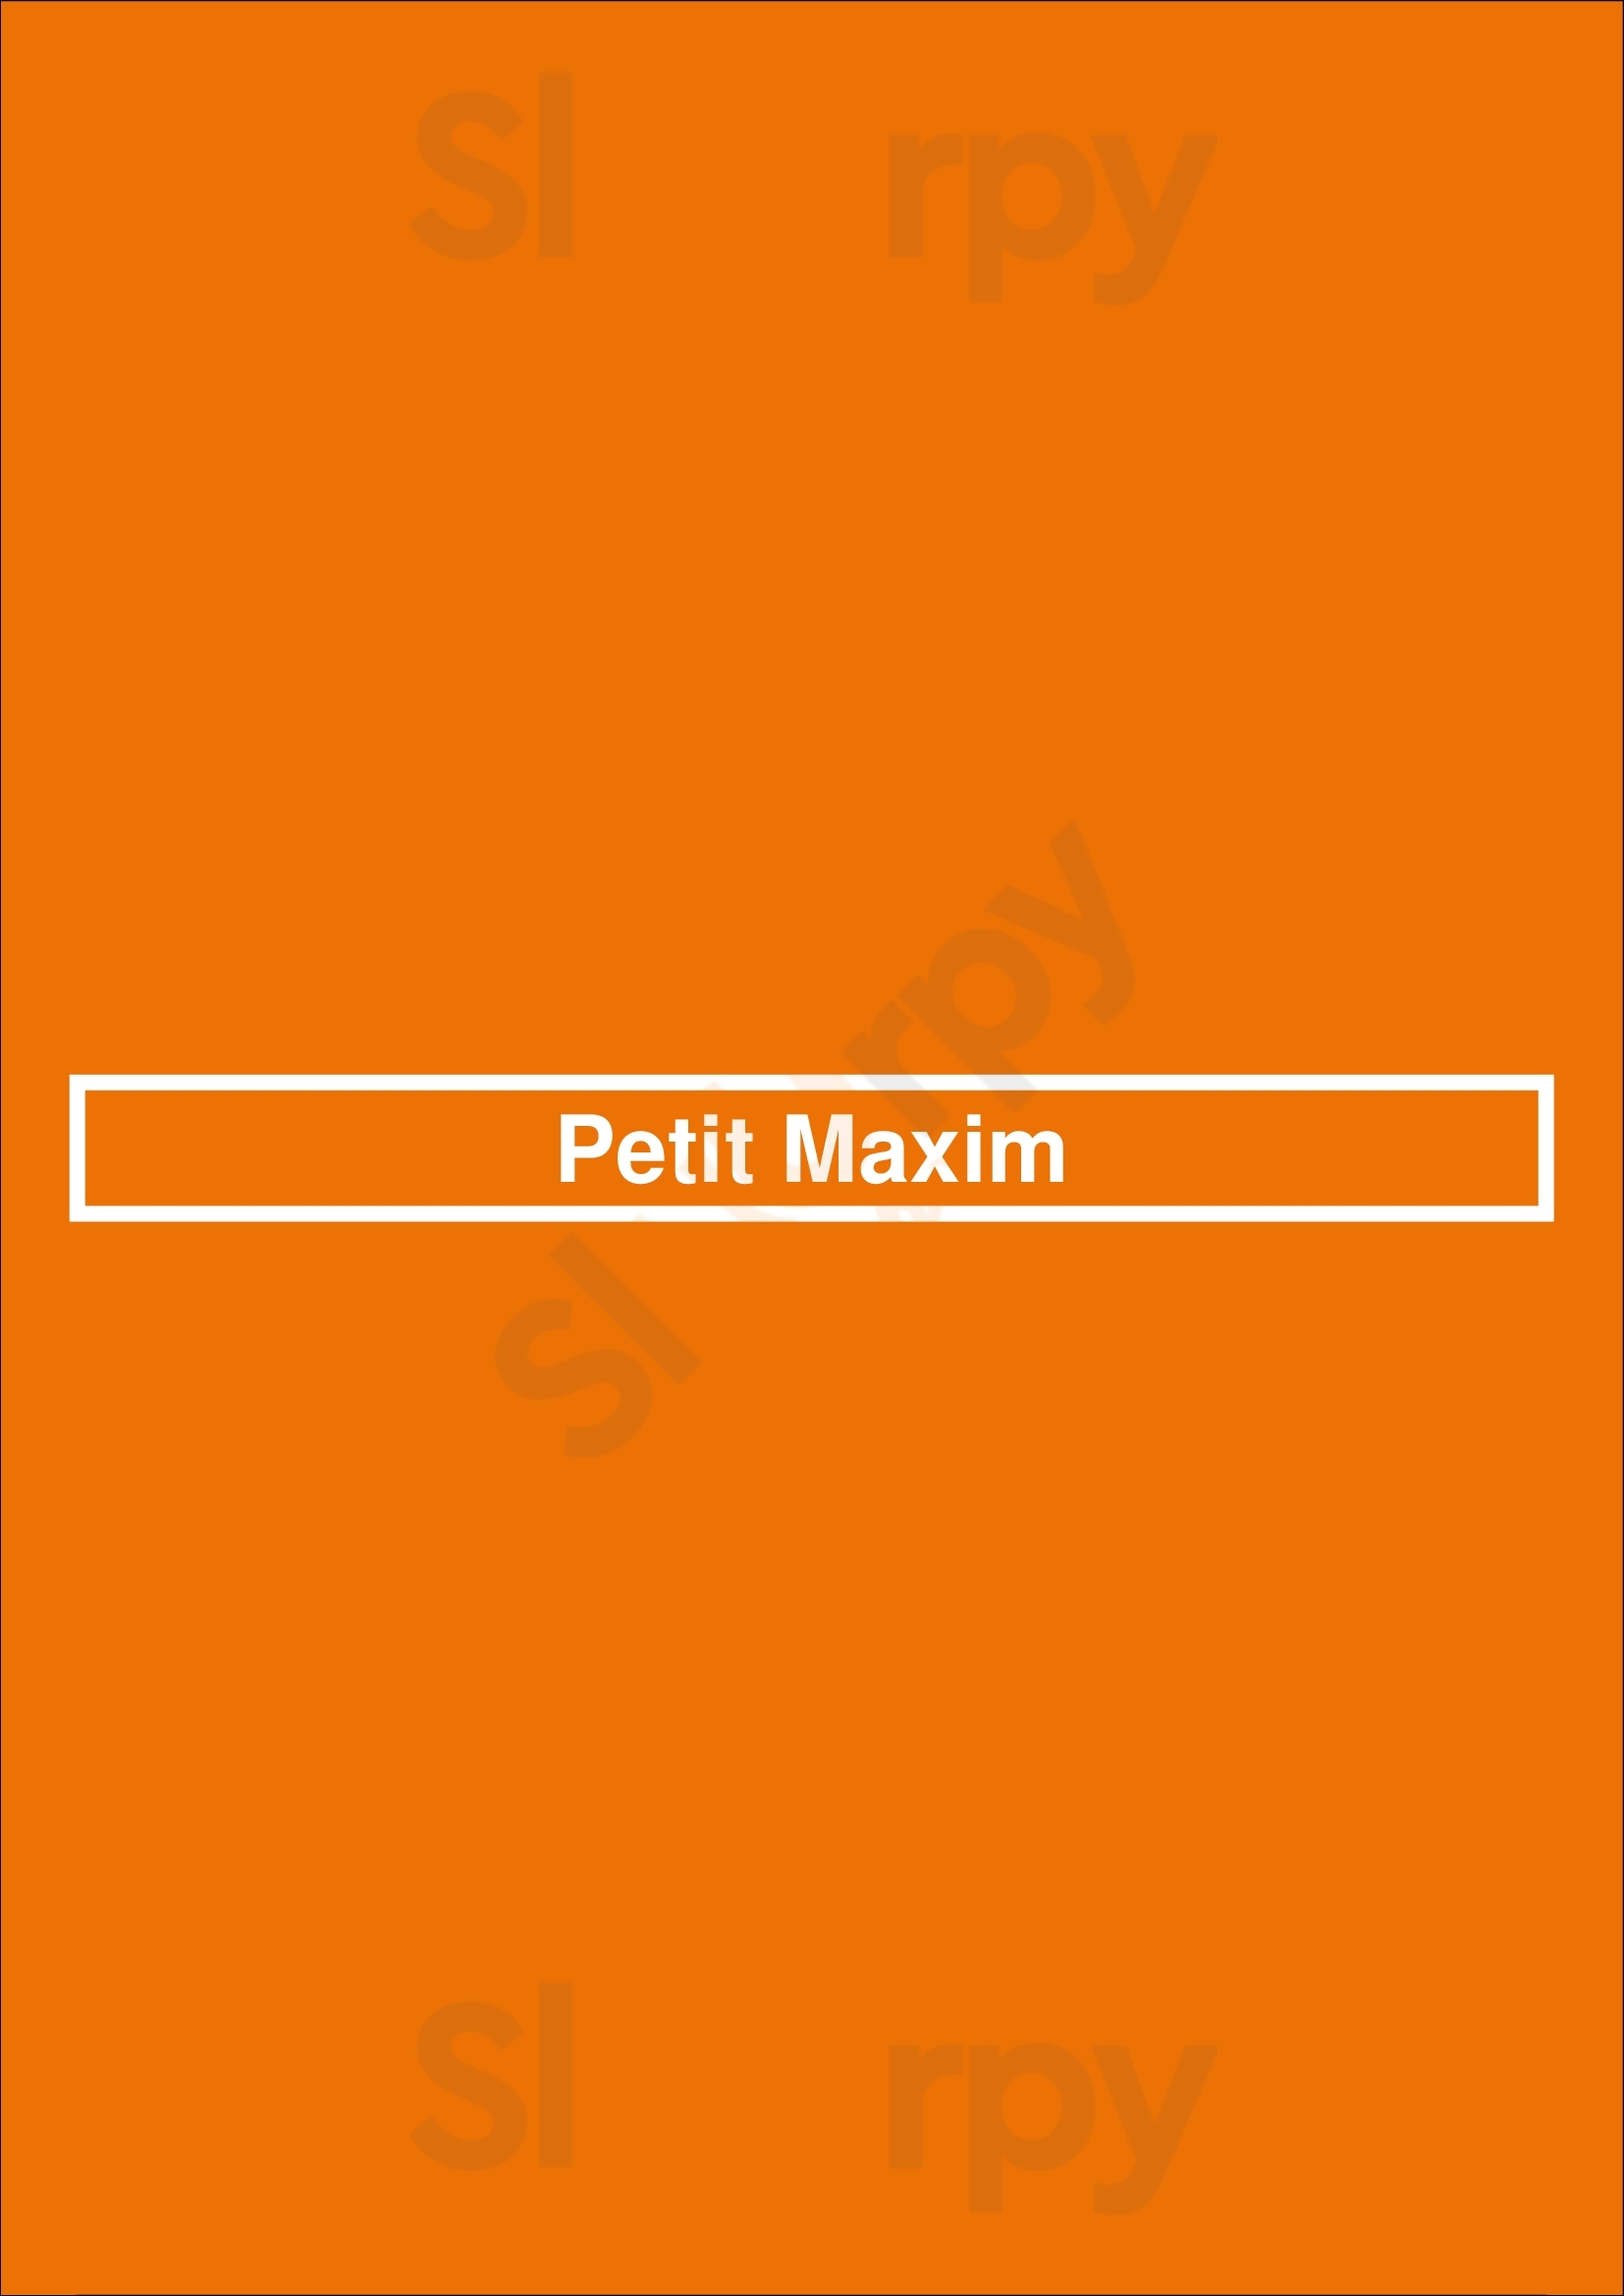 Petit Maxim Bruges Menu - 1